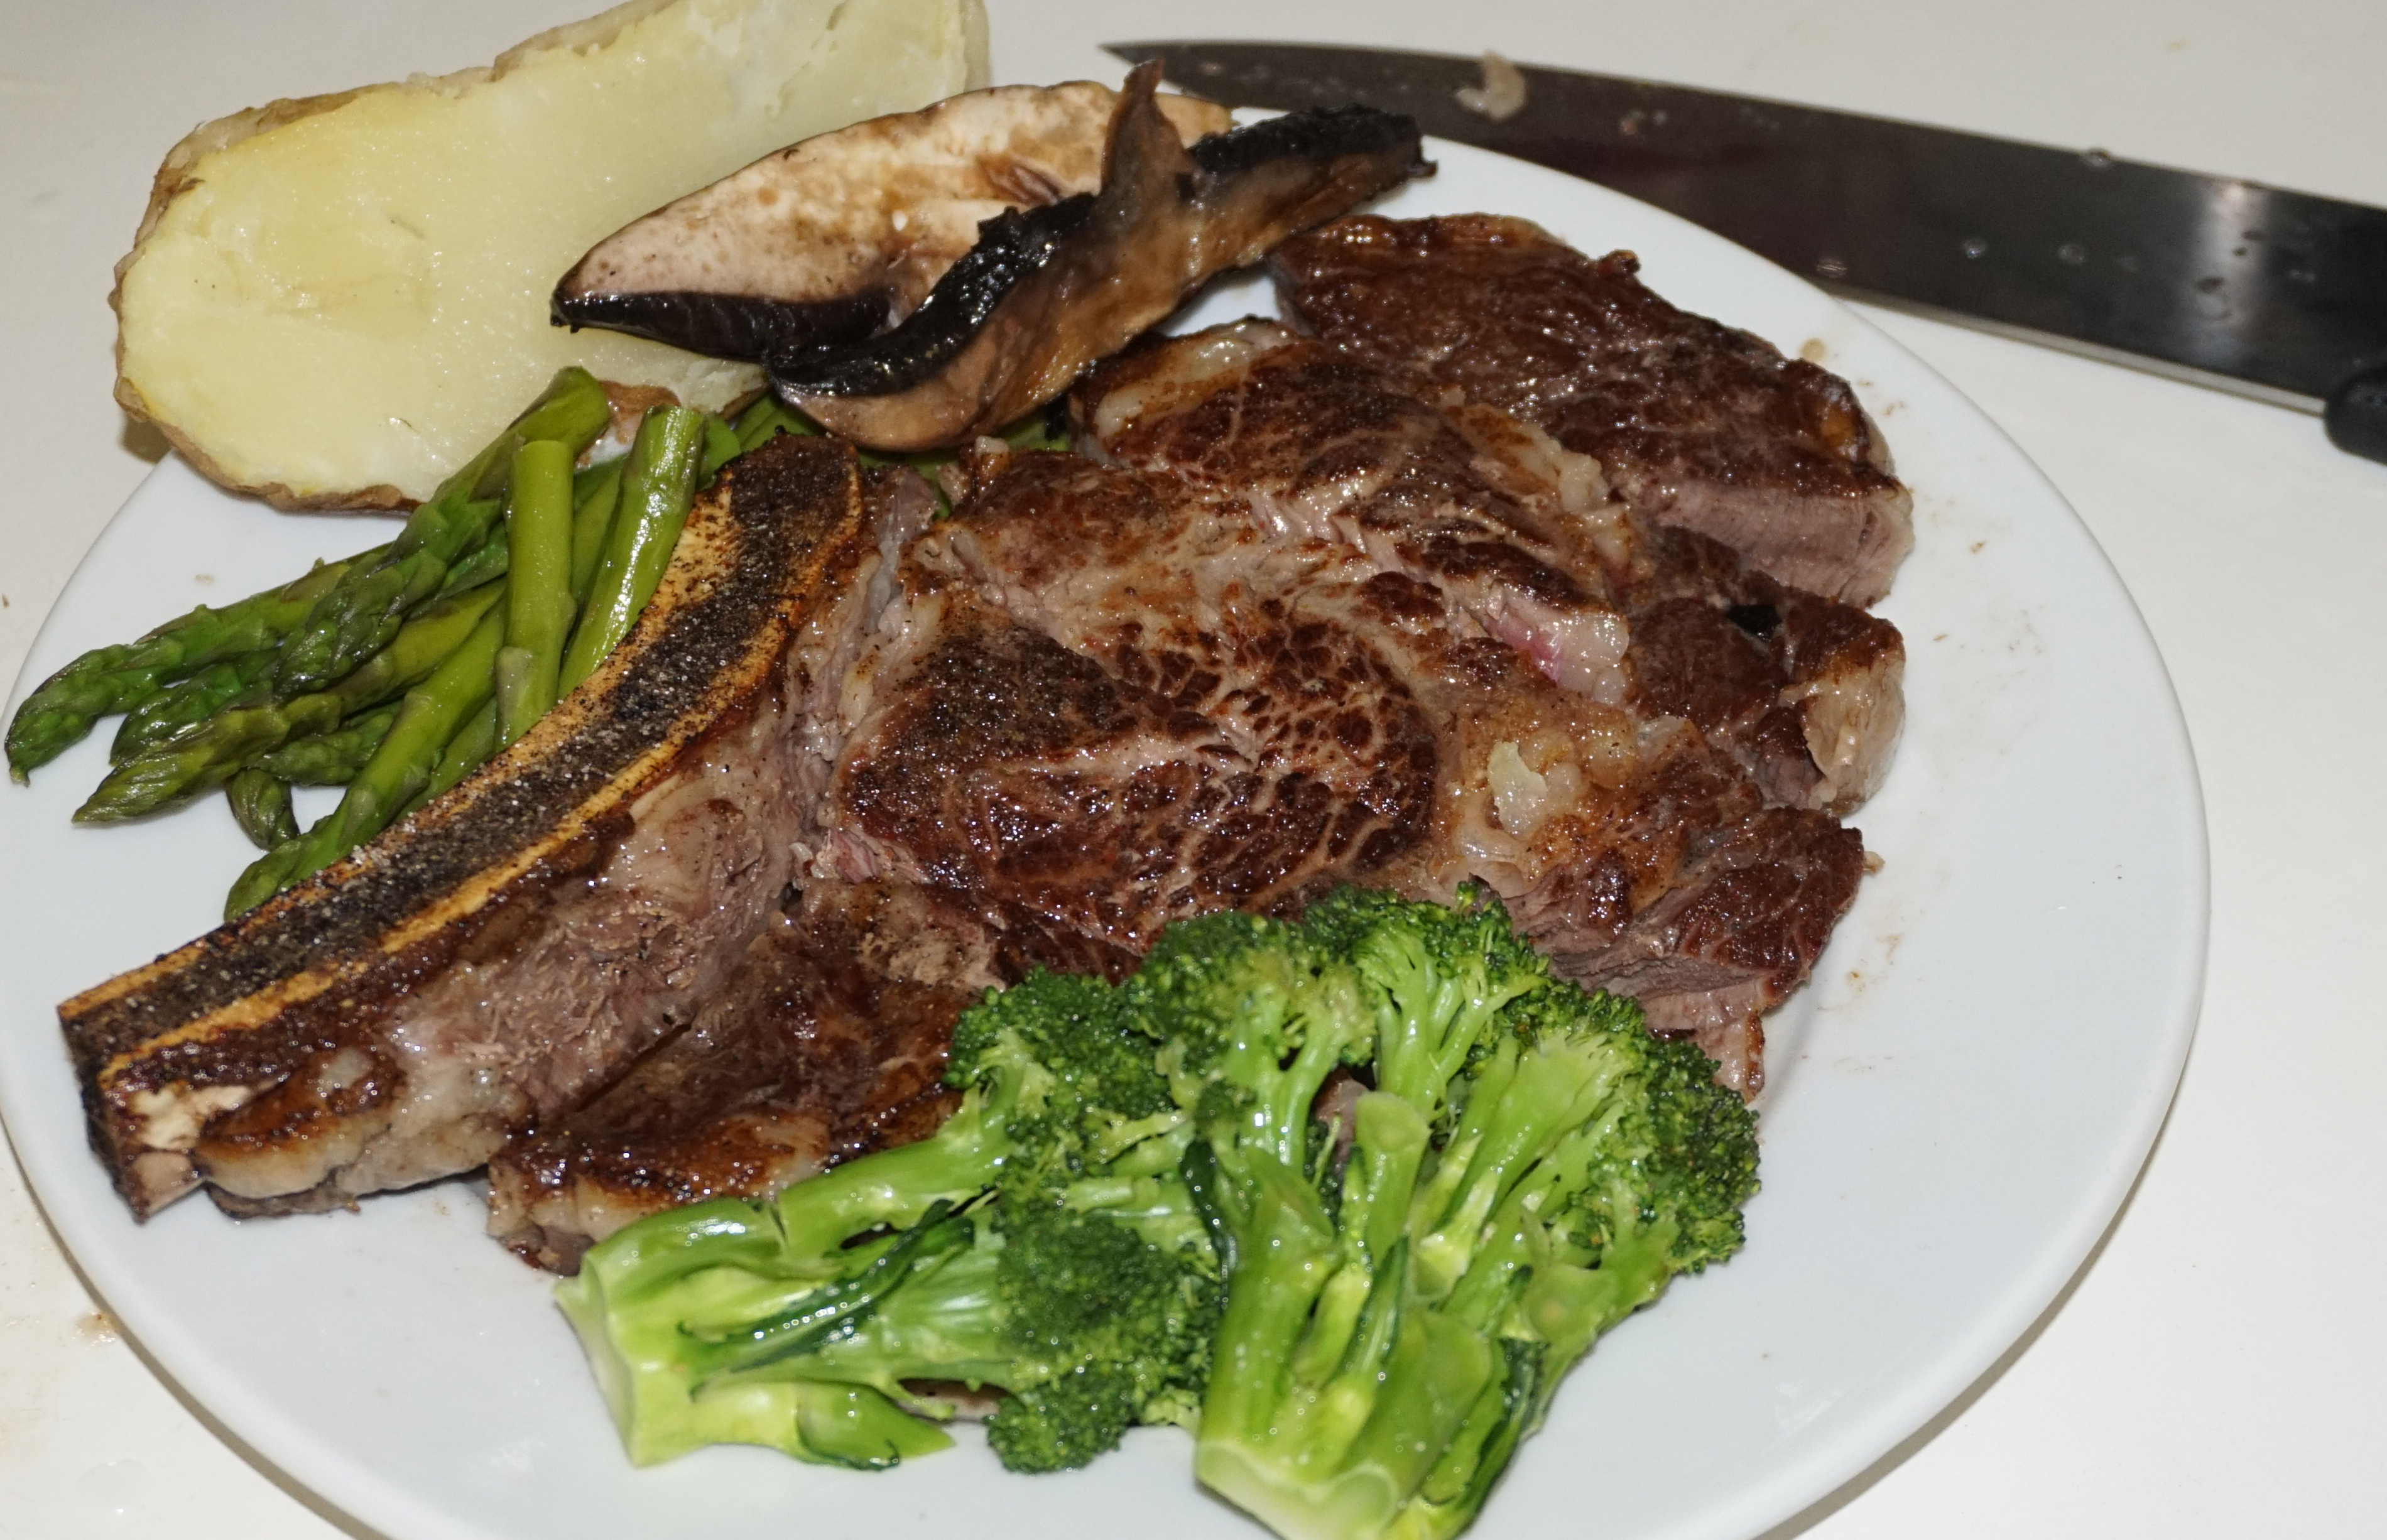 Steak and veggies on plate